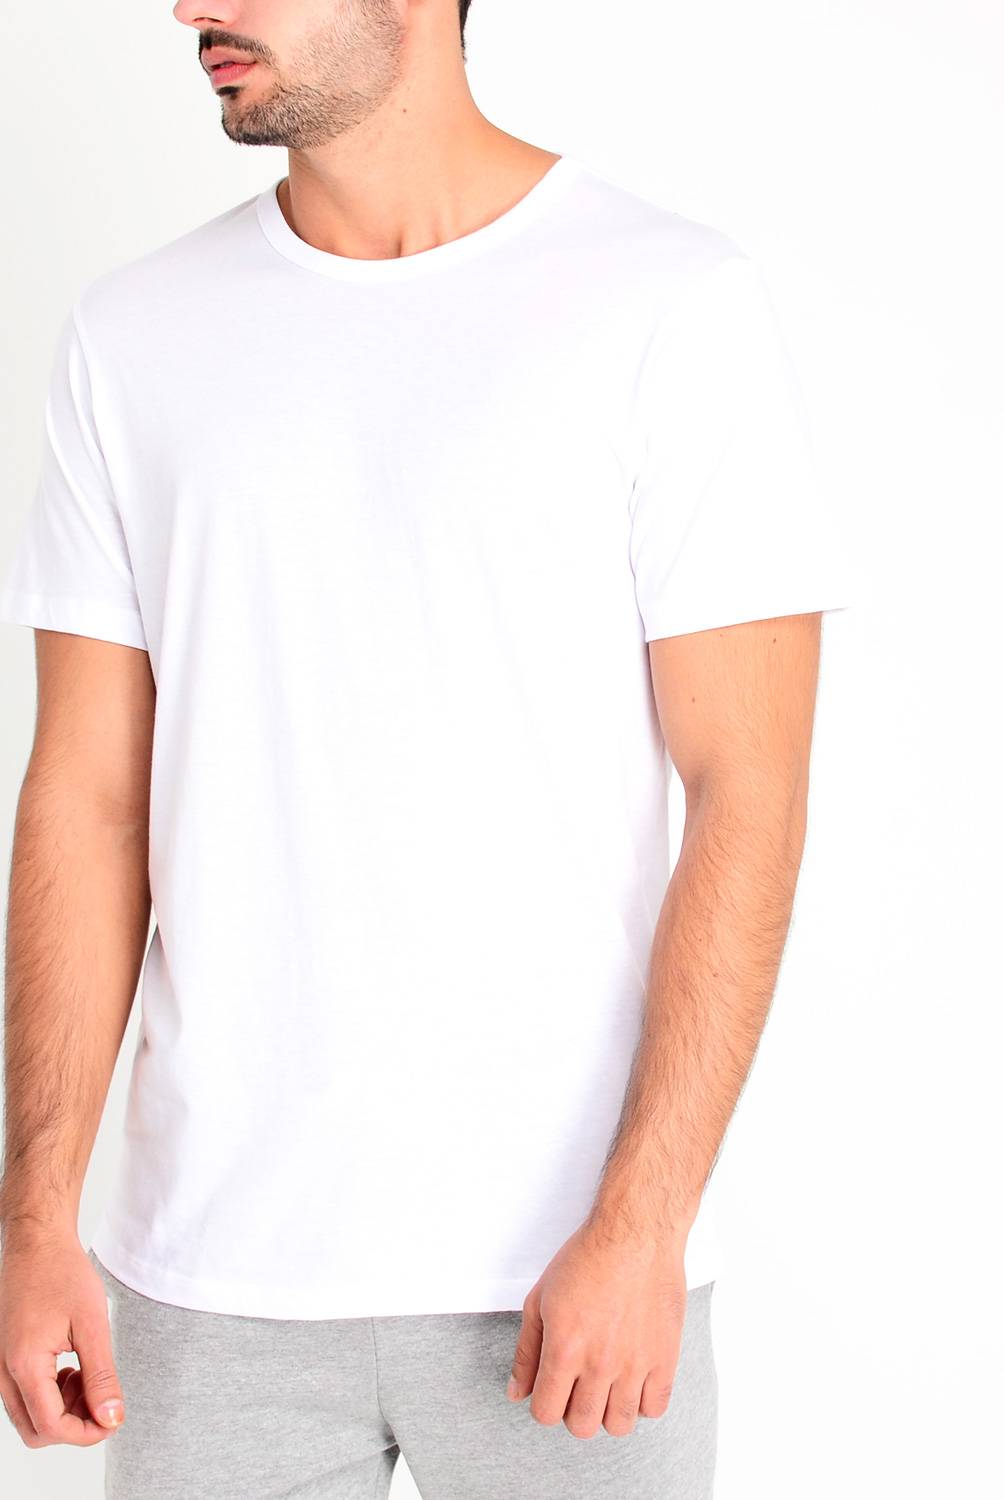 BASEMENT - Camiseta Manga Corta Hombre